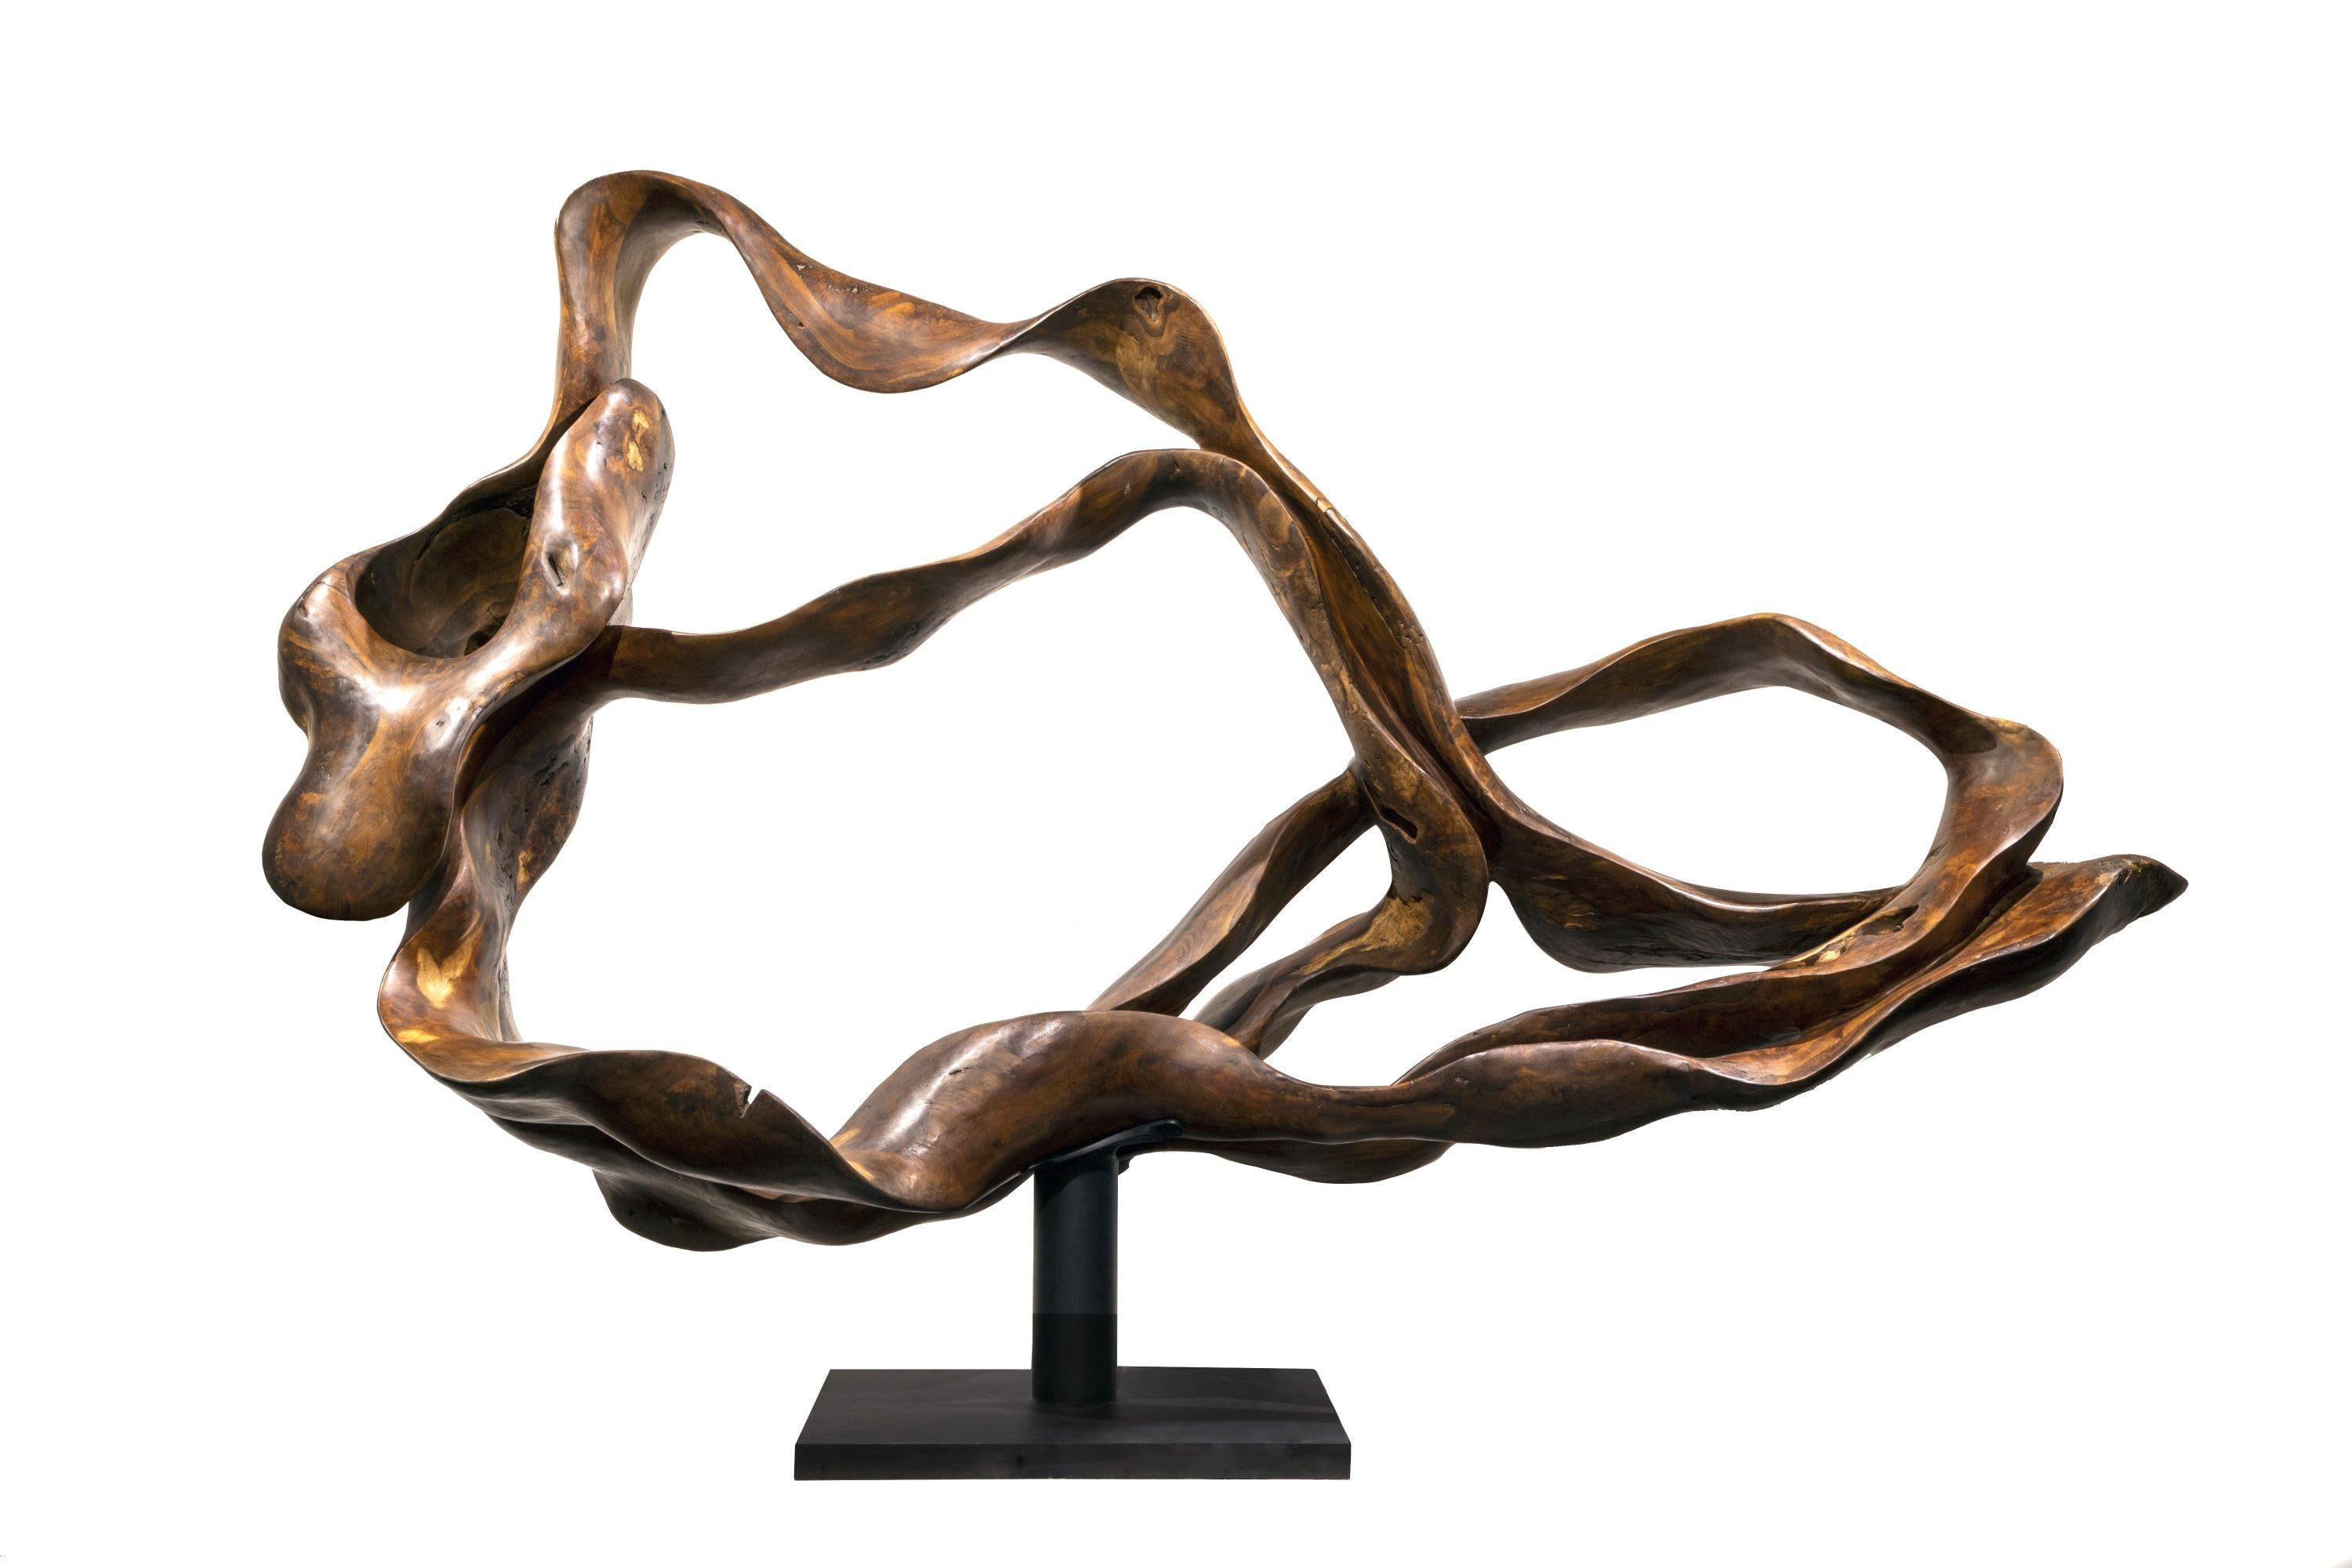 Aura - 21st Century, Contemporary, Abstract Sculpture, Mahogany Root, Wood